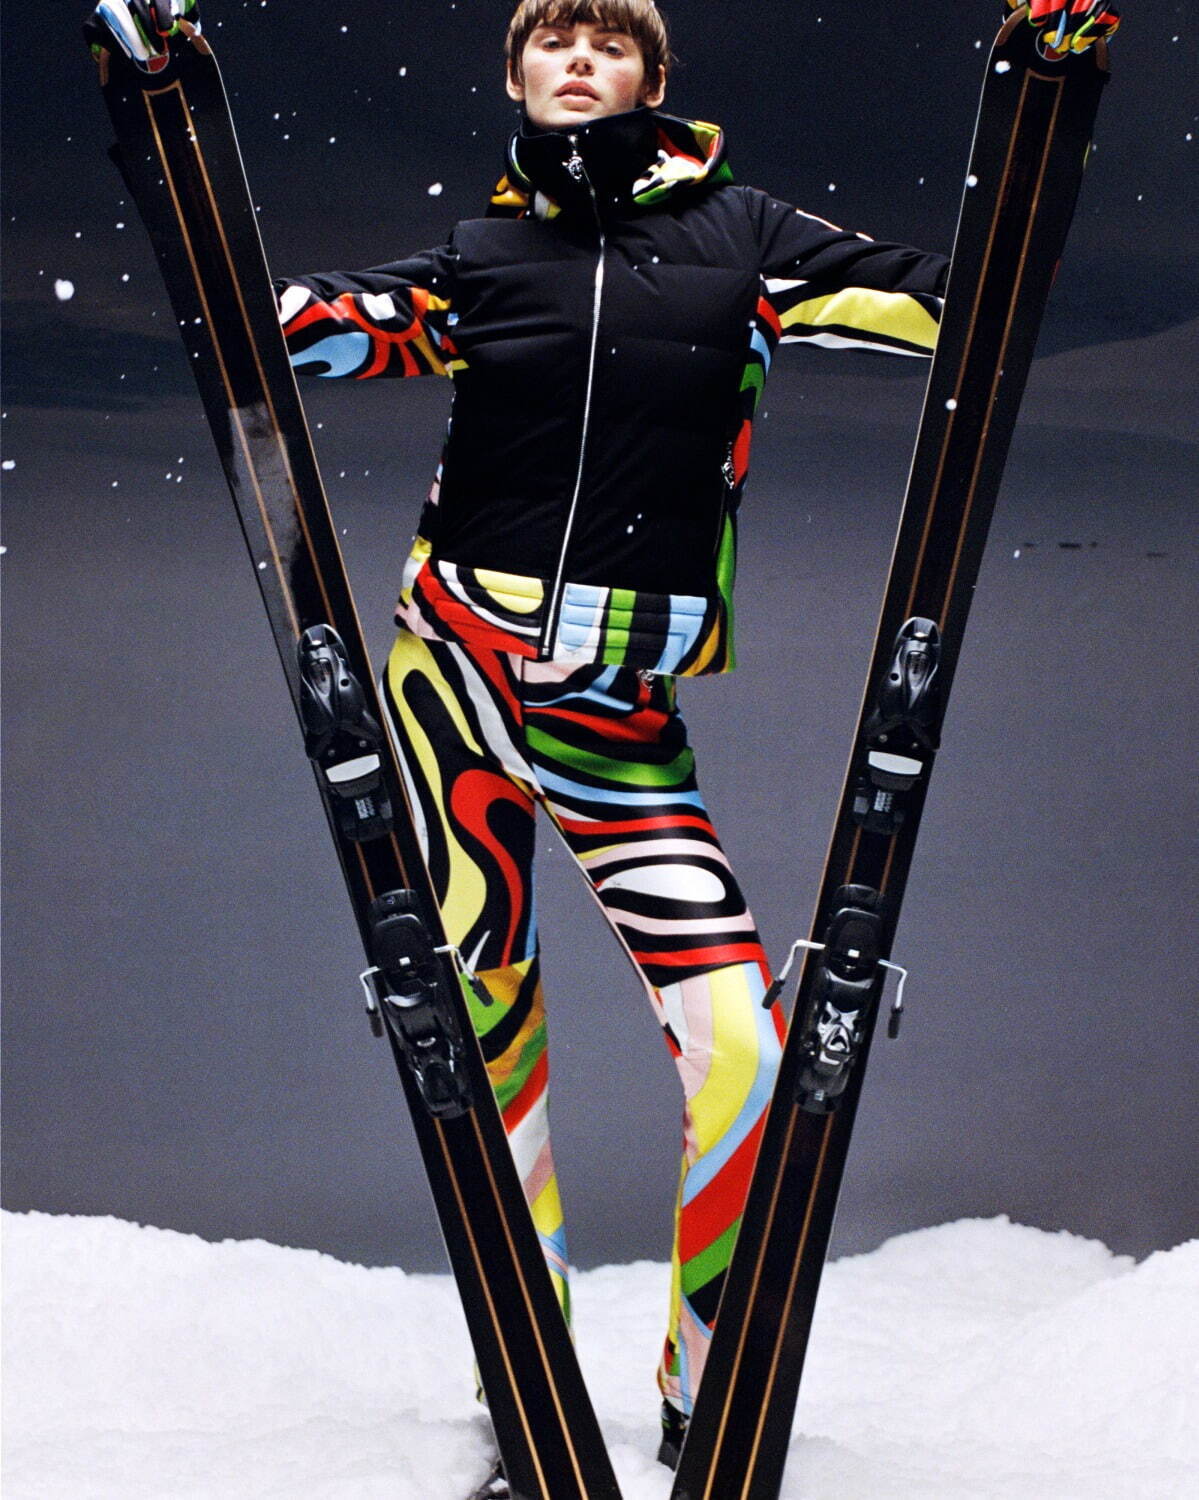 Pucci × Fusalp Marmoプリント スキージャケット 262,900円
Pucci × Fusalp Marmo＆ Irideプリント スキーパンツ 150,700円